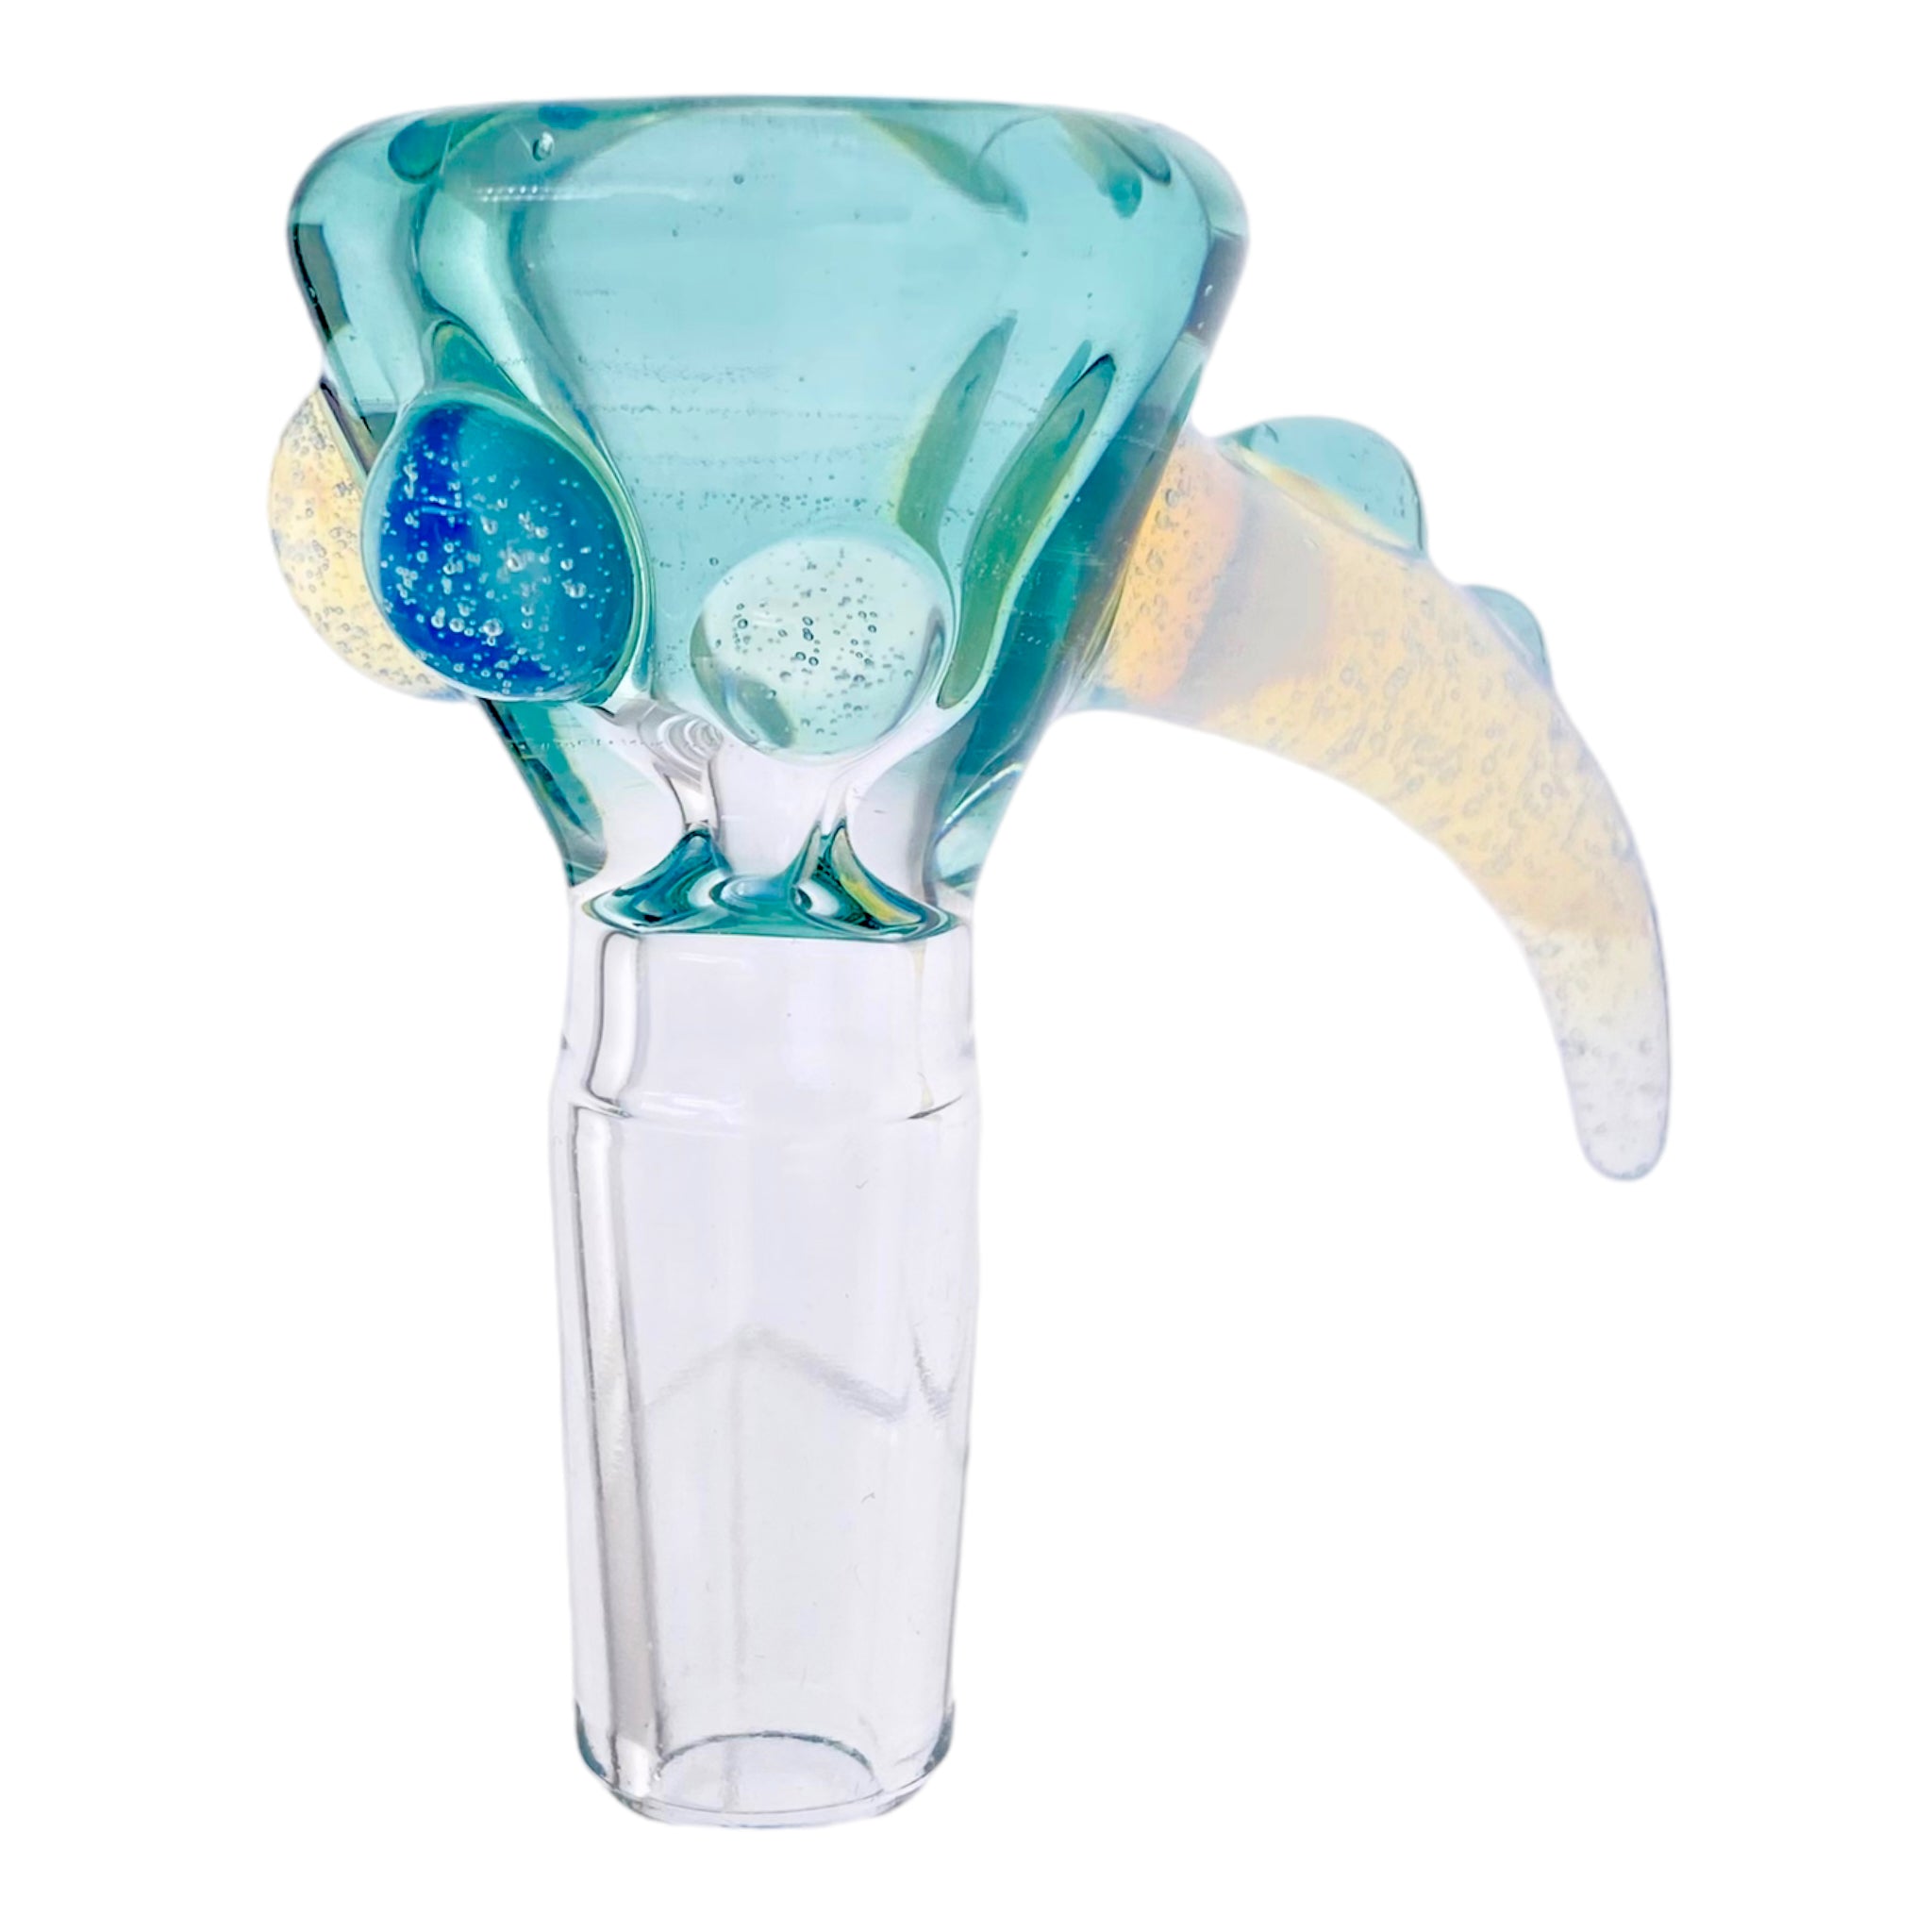 Arko Glass - 14mm Flower Bowl - Aqua Blue With Mystic Fume Handle